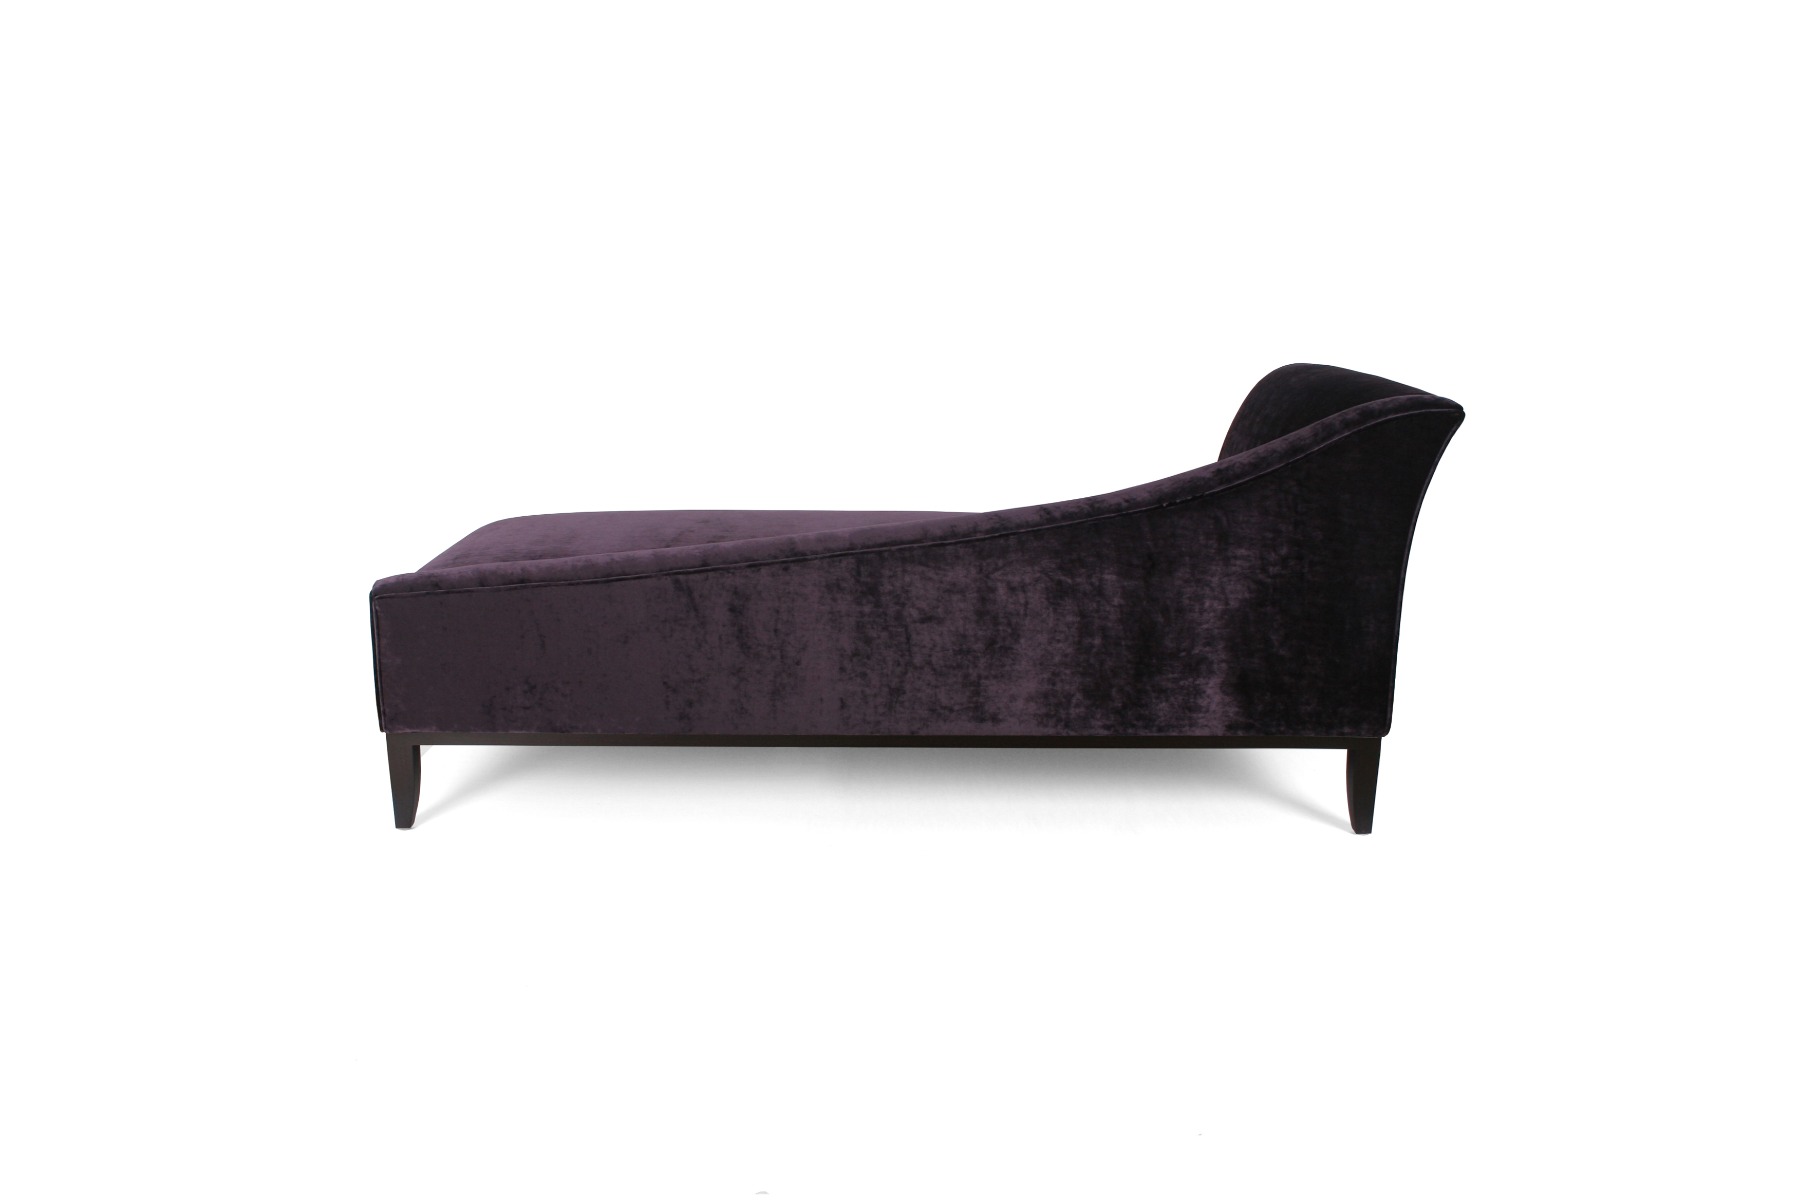 Luxury royal purple Donovan Chaise by Luxuria London